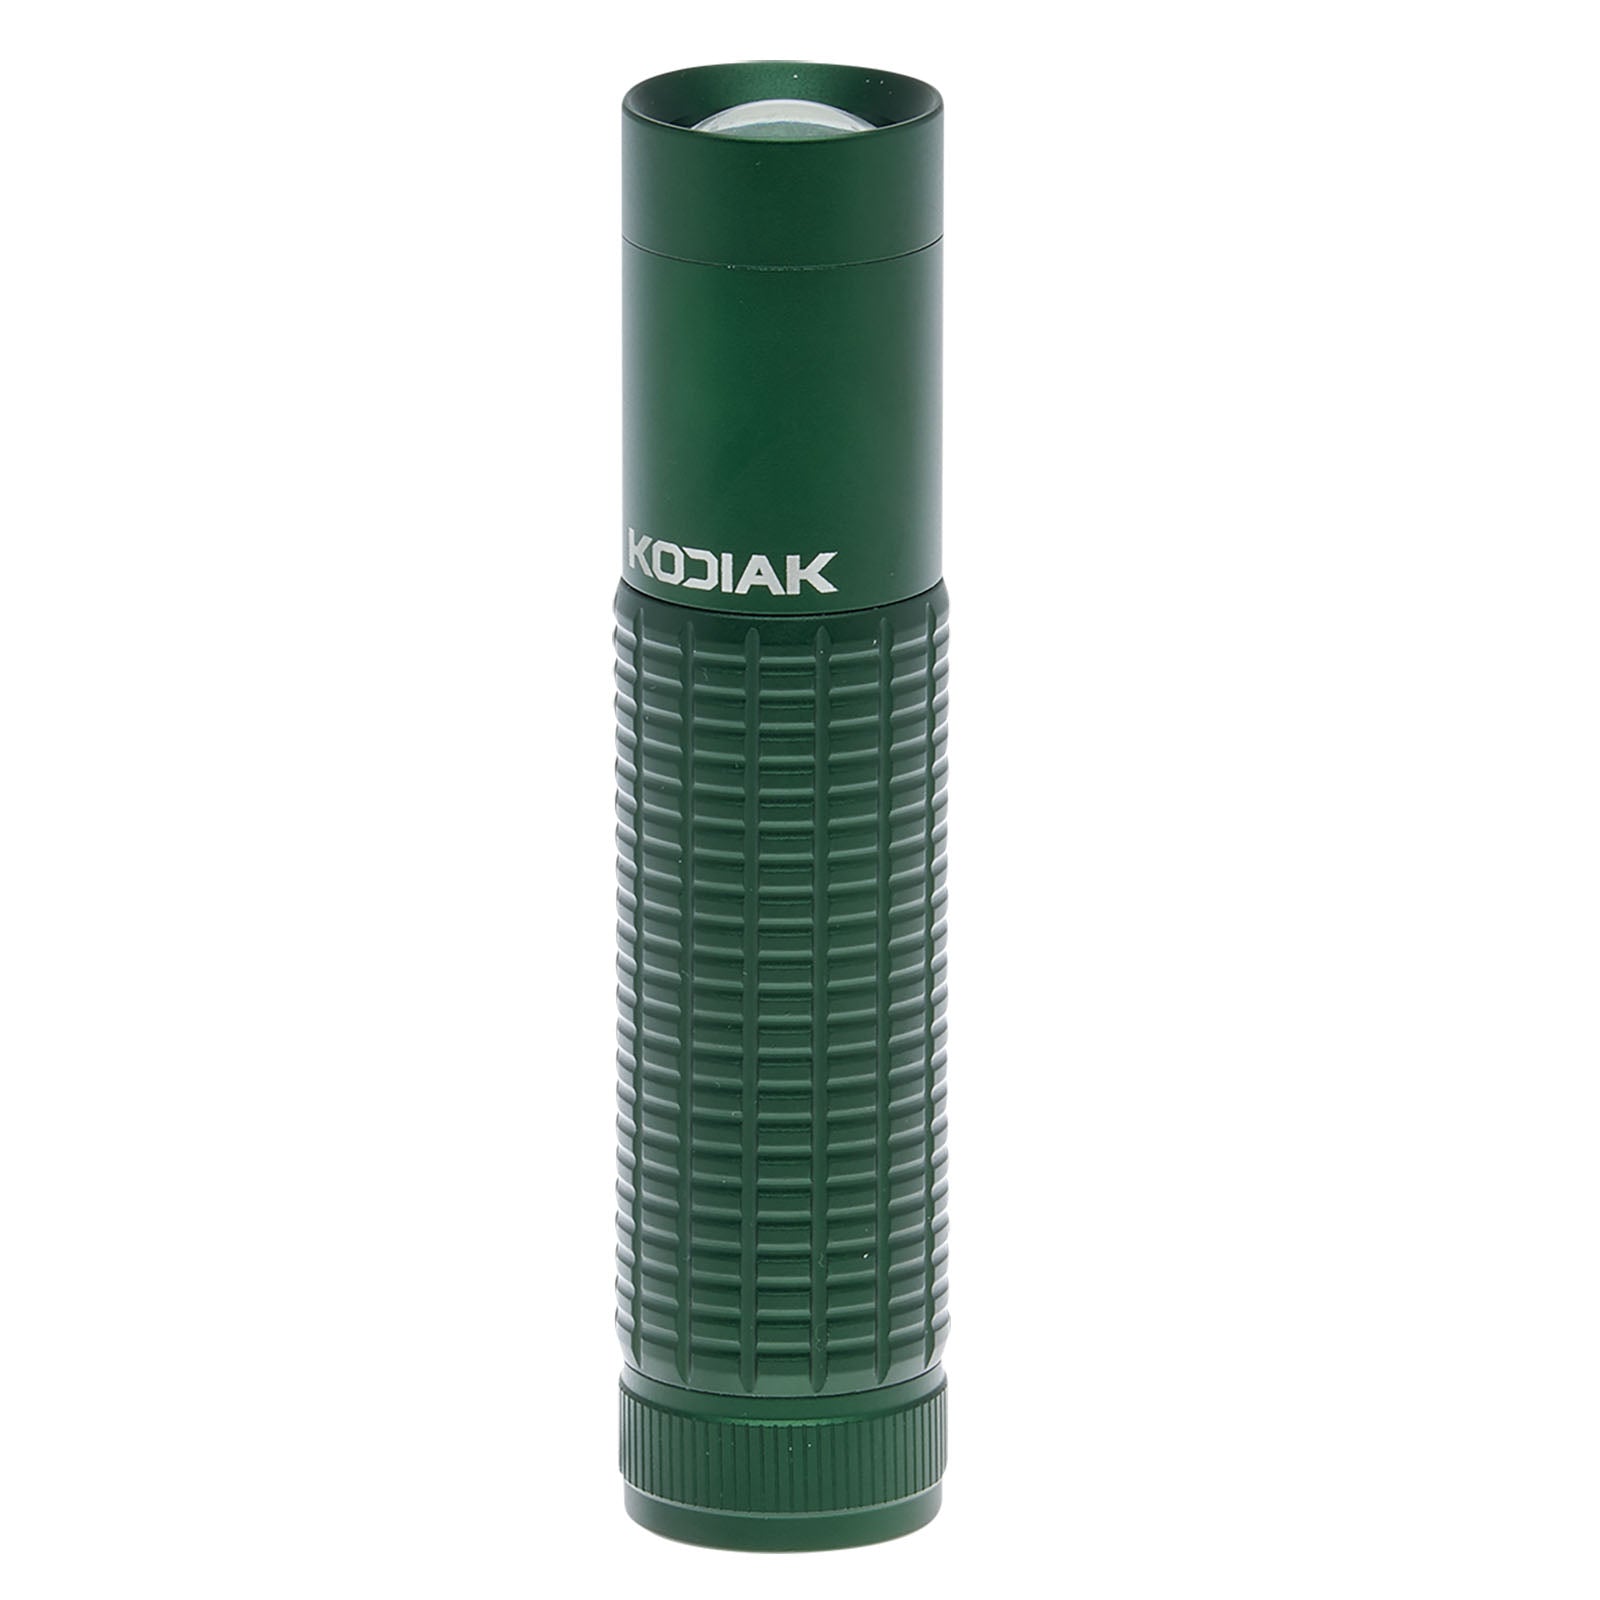 Kodiak Slim 700 Lumen Tactical Grade Flashlight